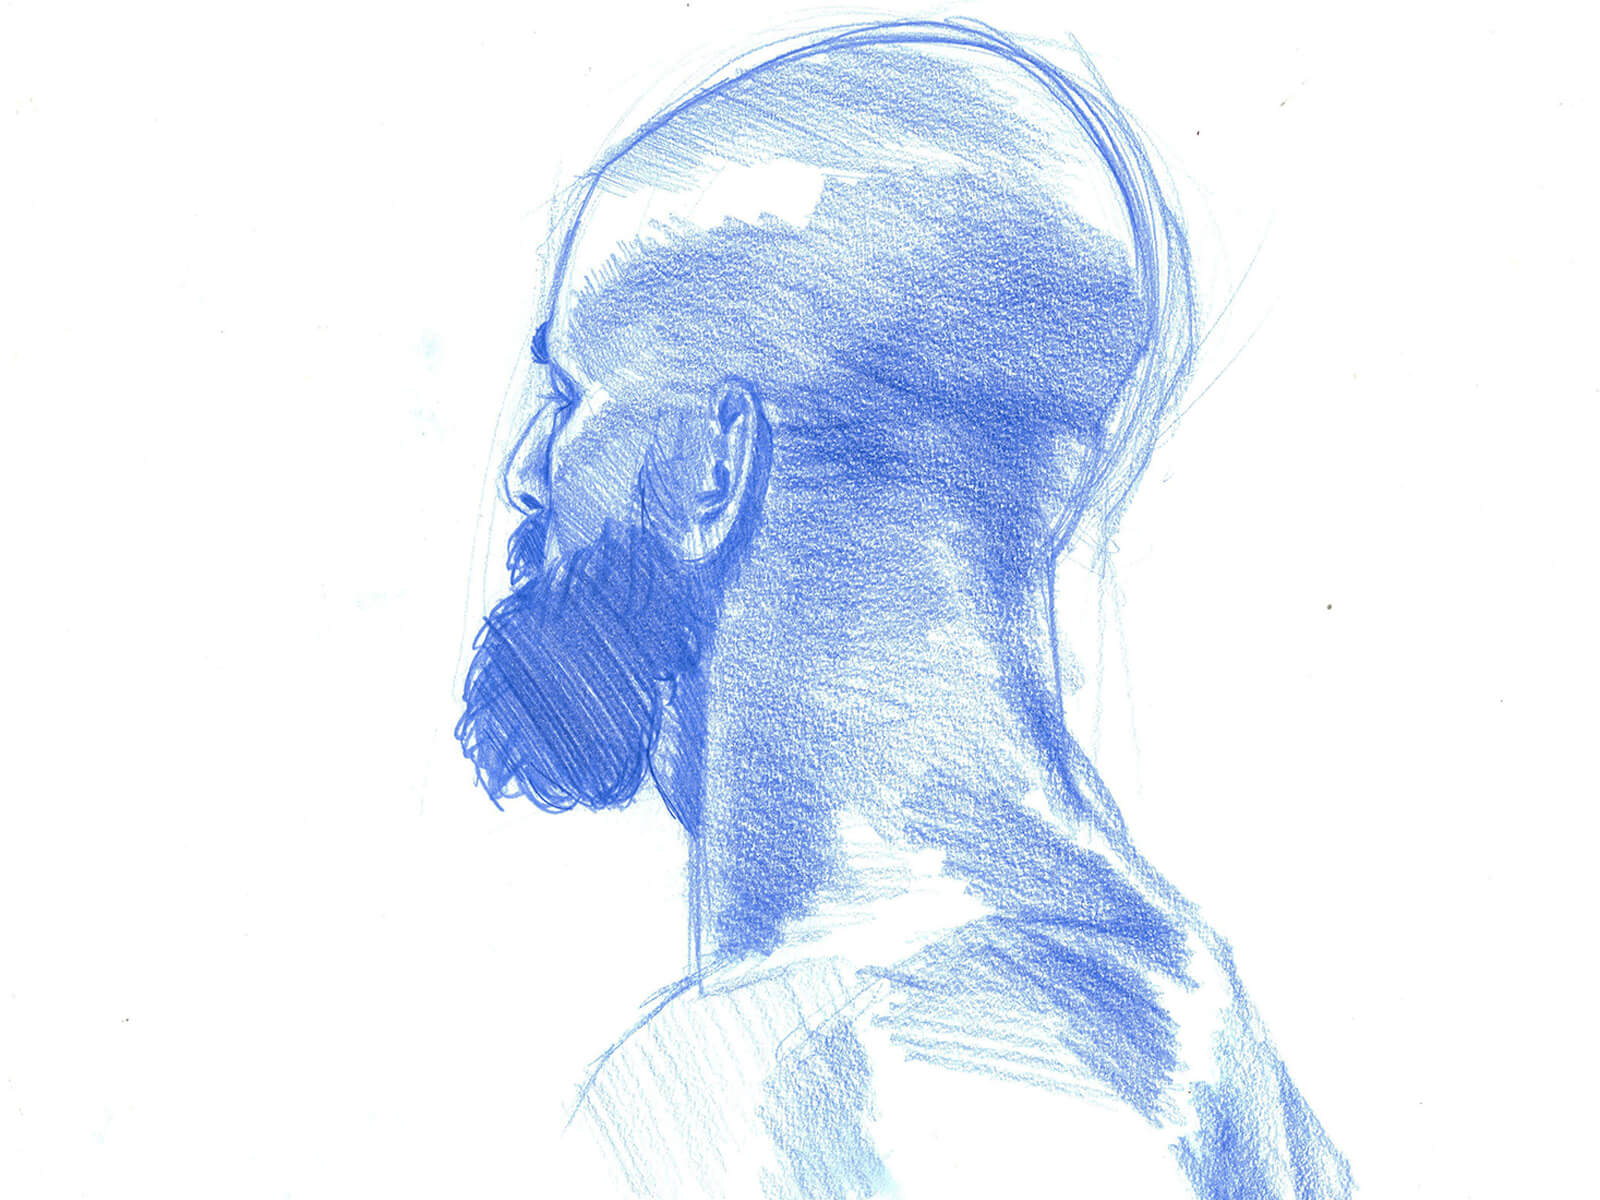 drawing of a bald man with a dark beard